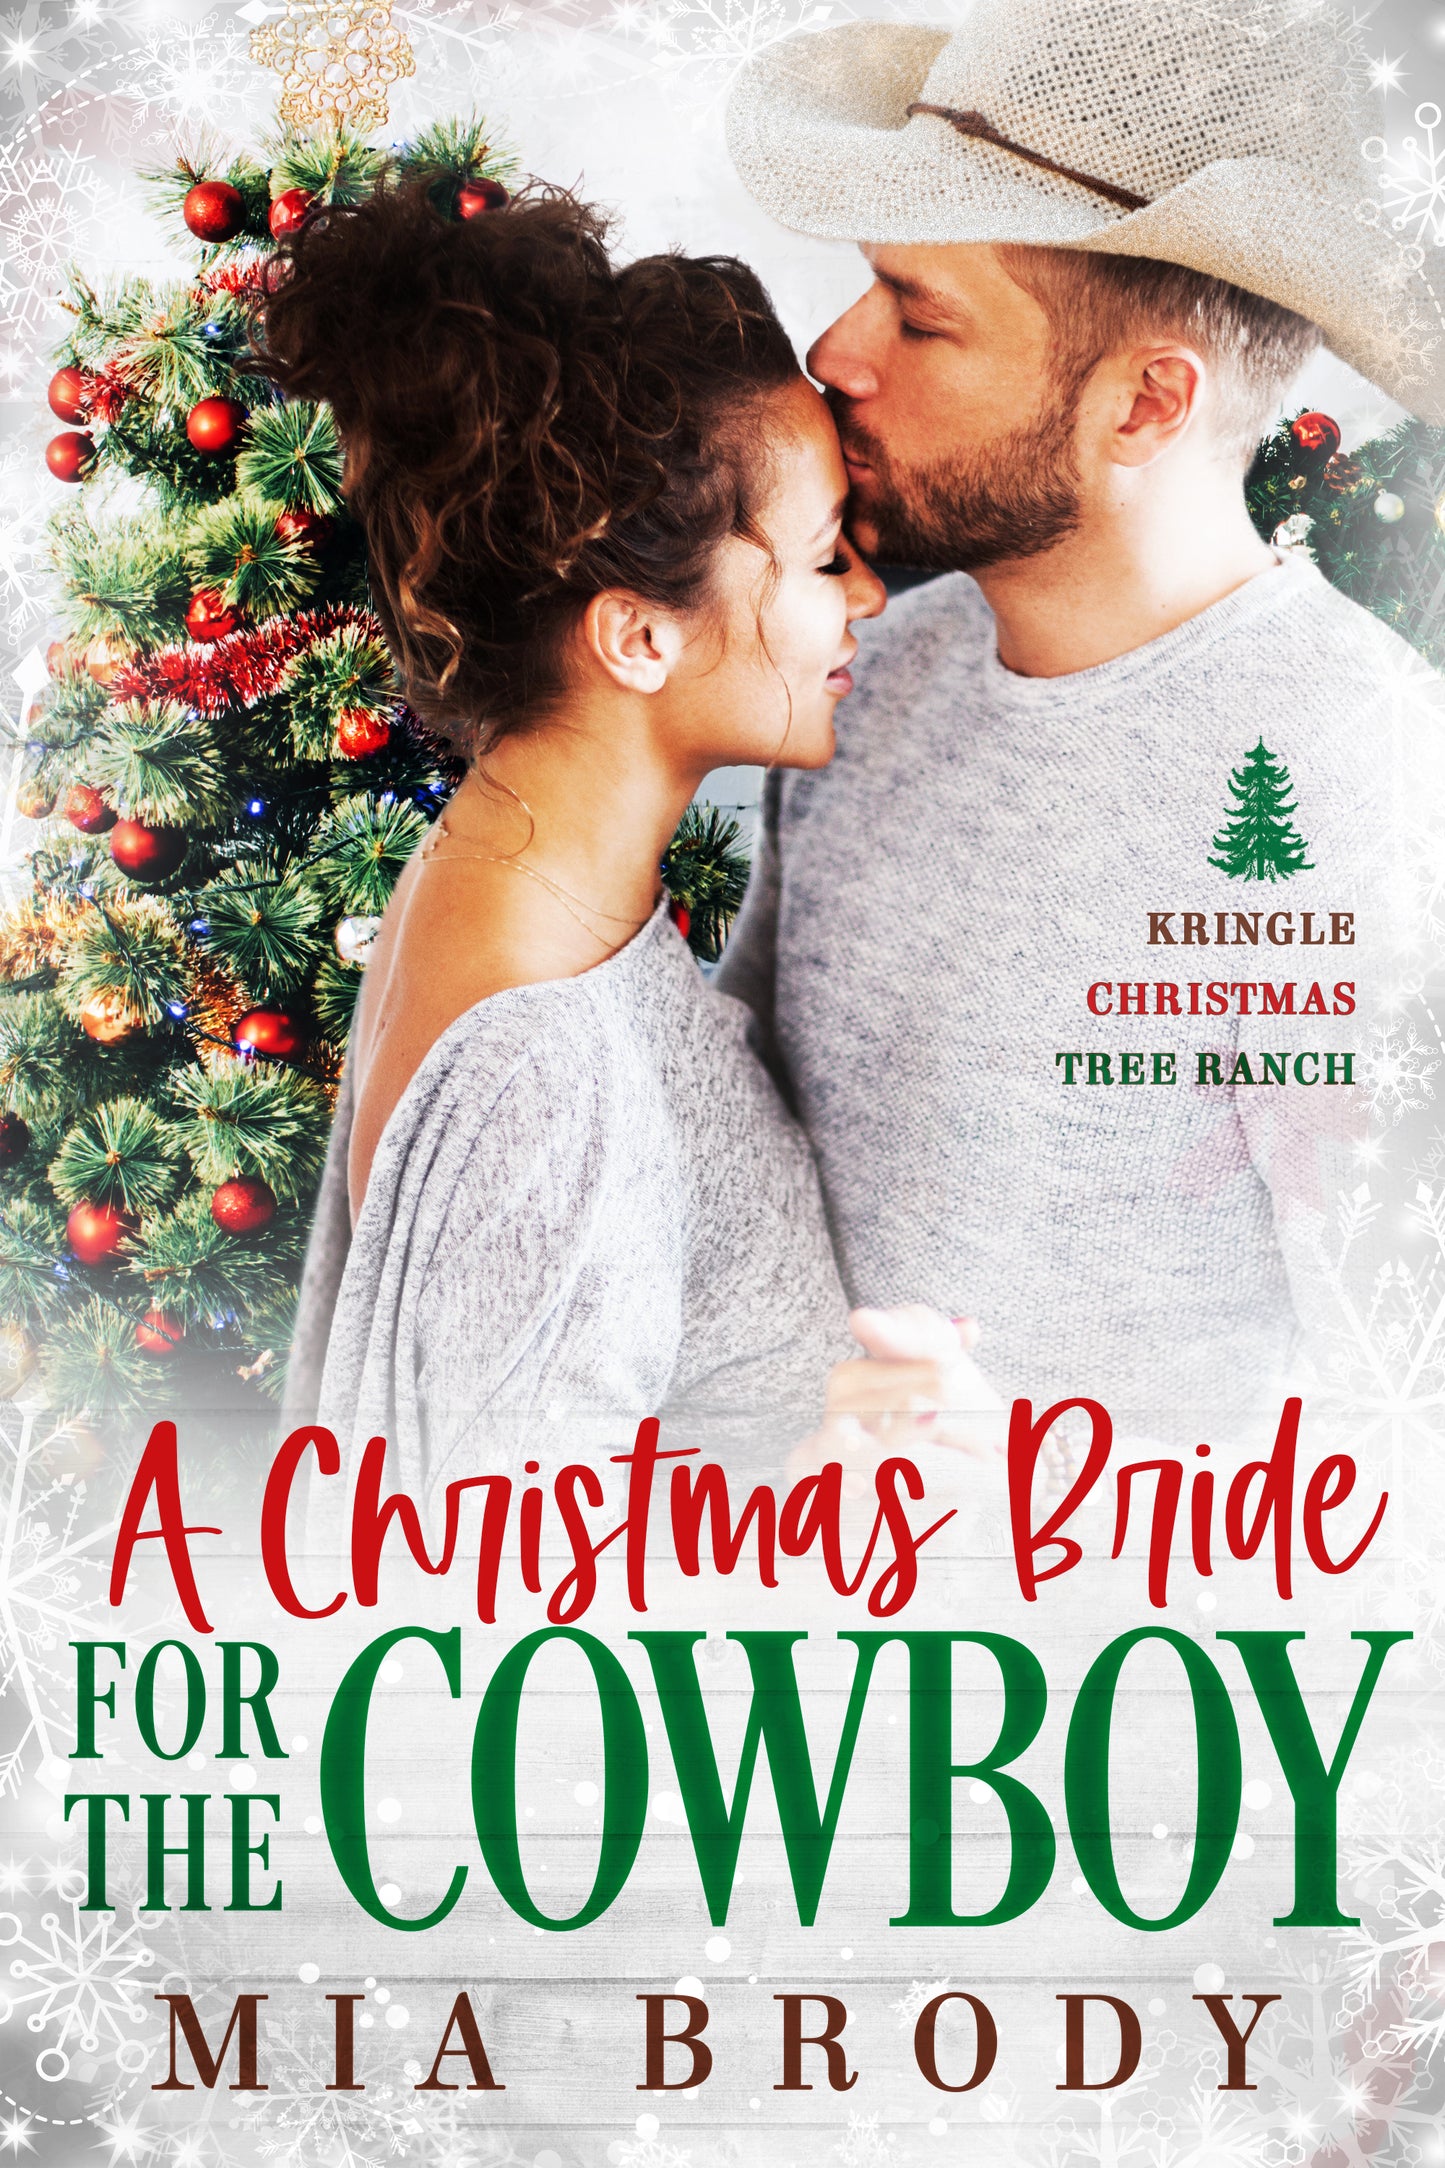 A Christmas Bride for the Cowboy